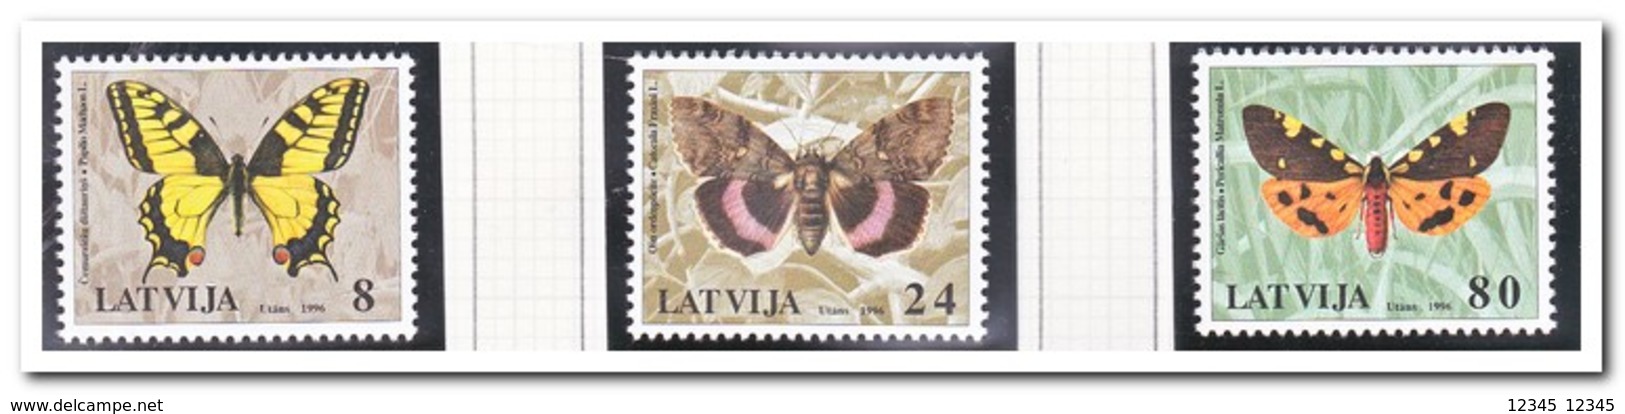 Letland 1996, Postfris MNH, Butterflies - Letland